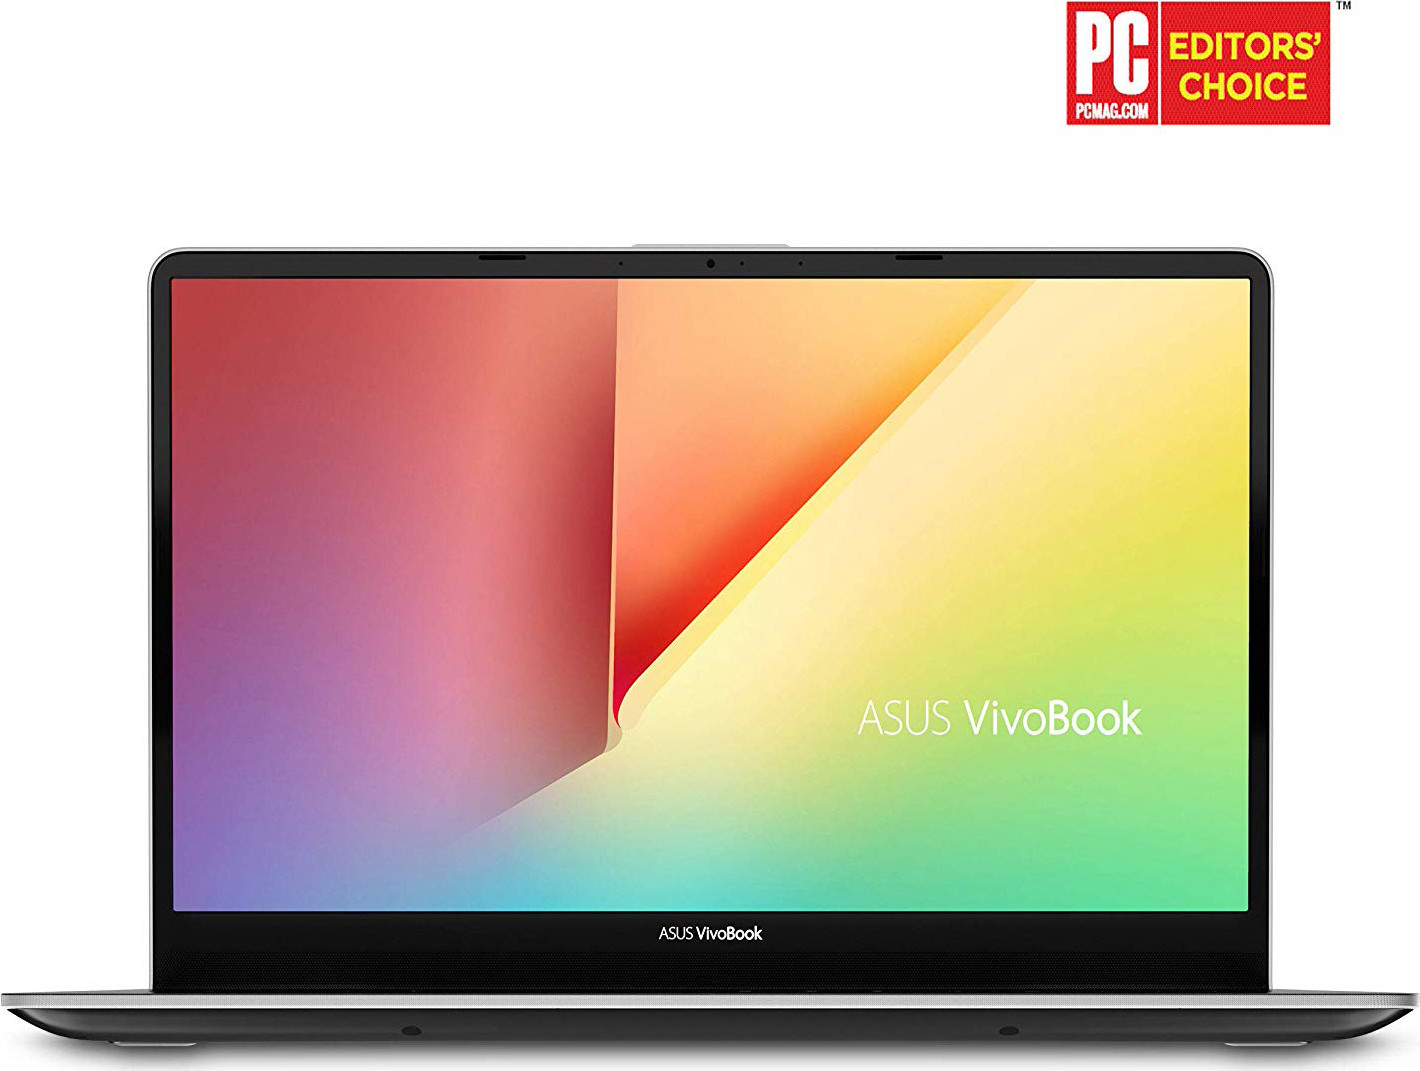 ASUS Vivobook S15 Slim and Portable Laptop, 15.6” Full HD NanoEdge Bezel, Intel Core I5-8265U Processor, 8GB DDR4, 256GB SSD, Windows 10 - S530FA-DB51, Gun Metal with Light Grey Trim